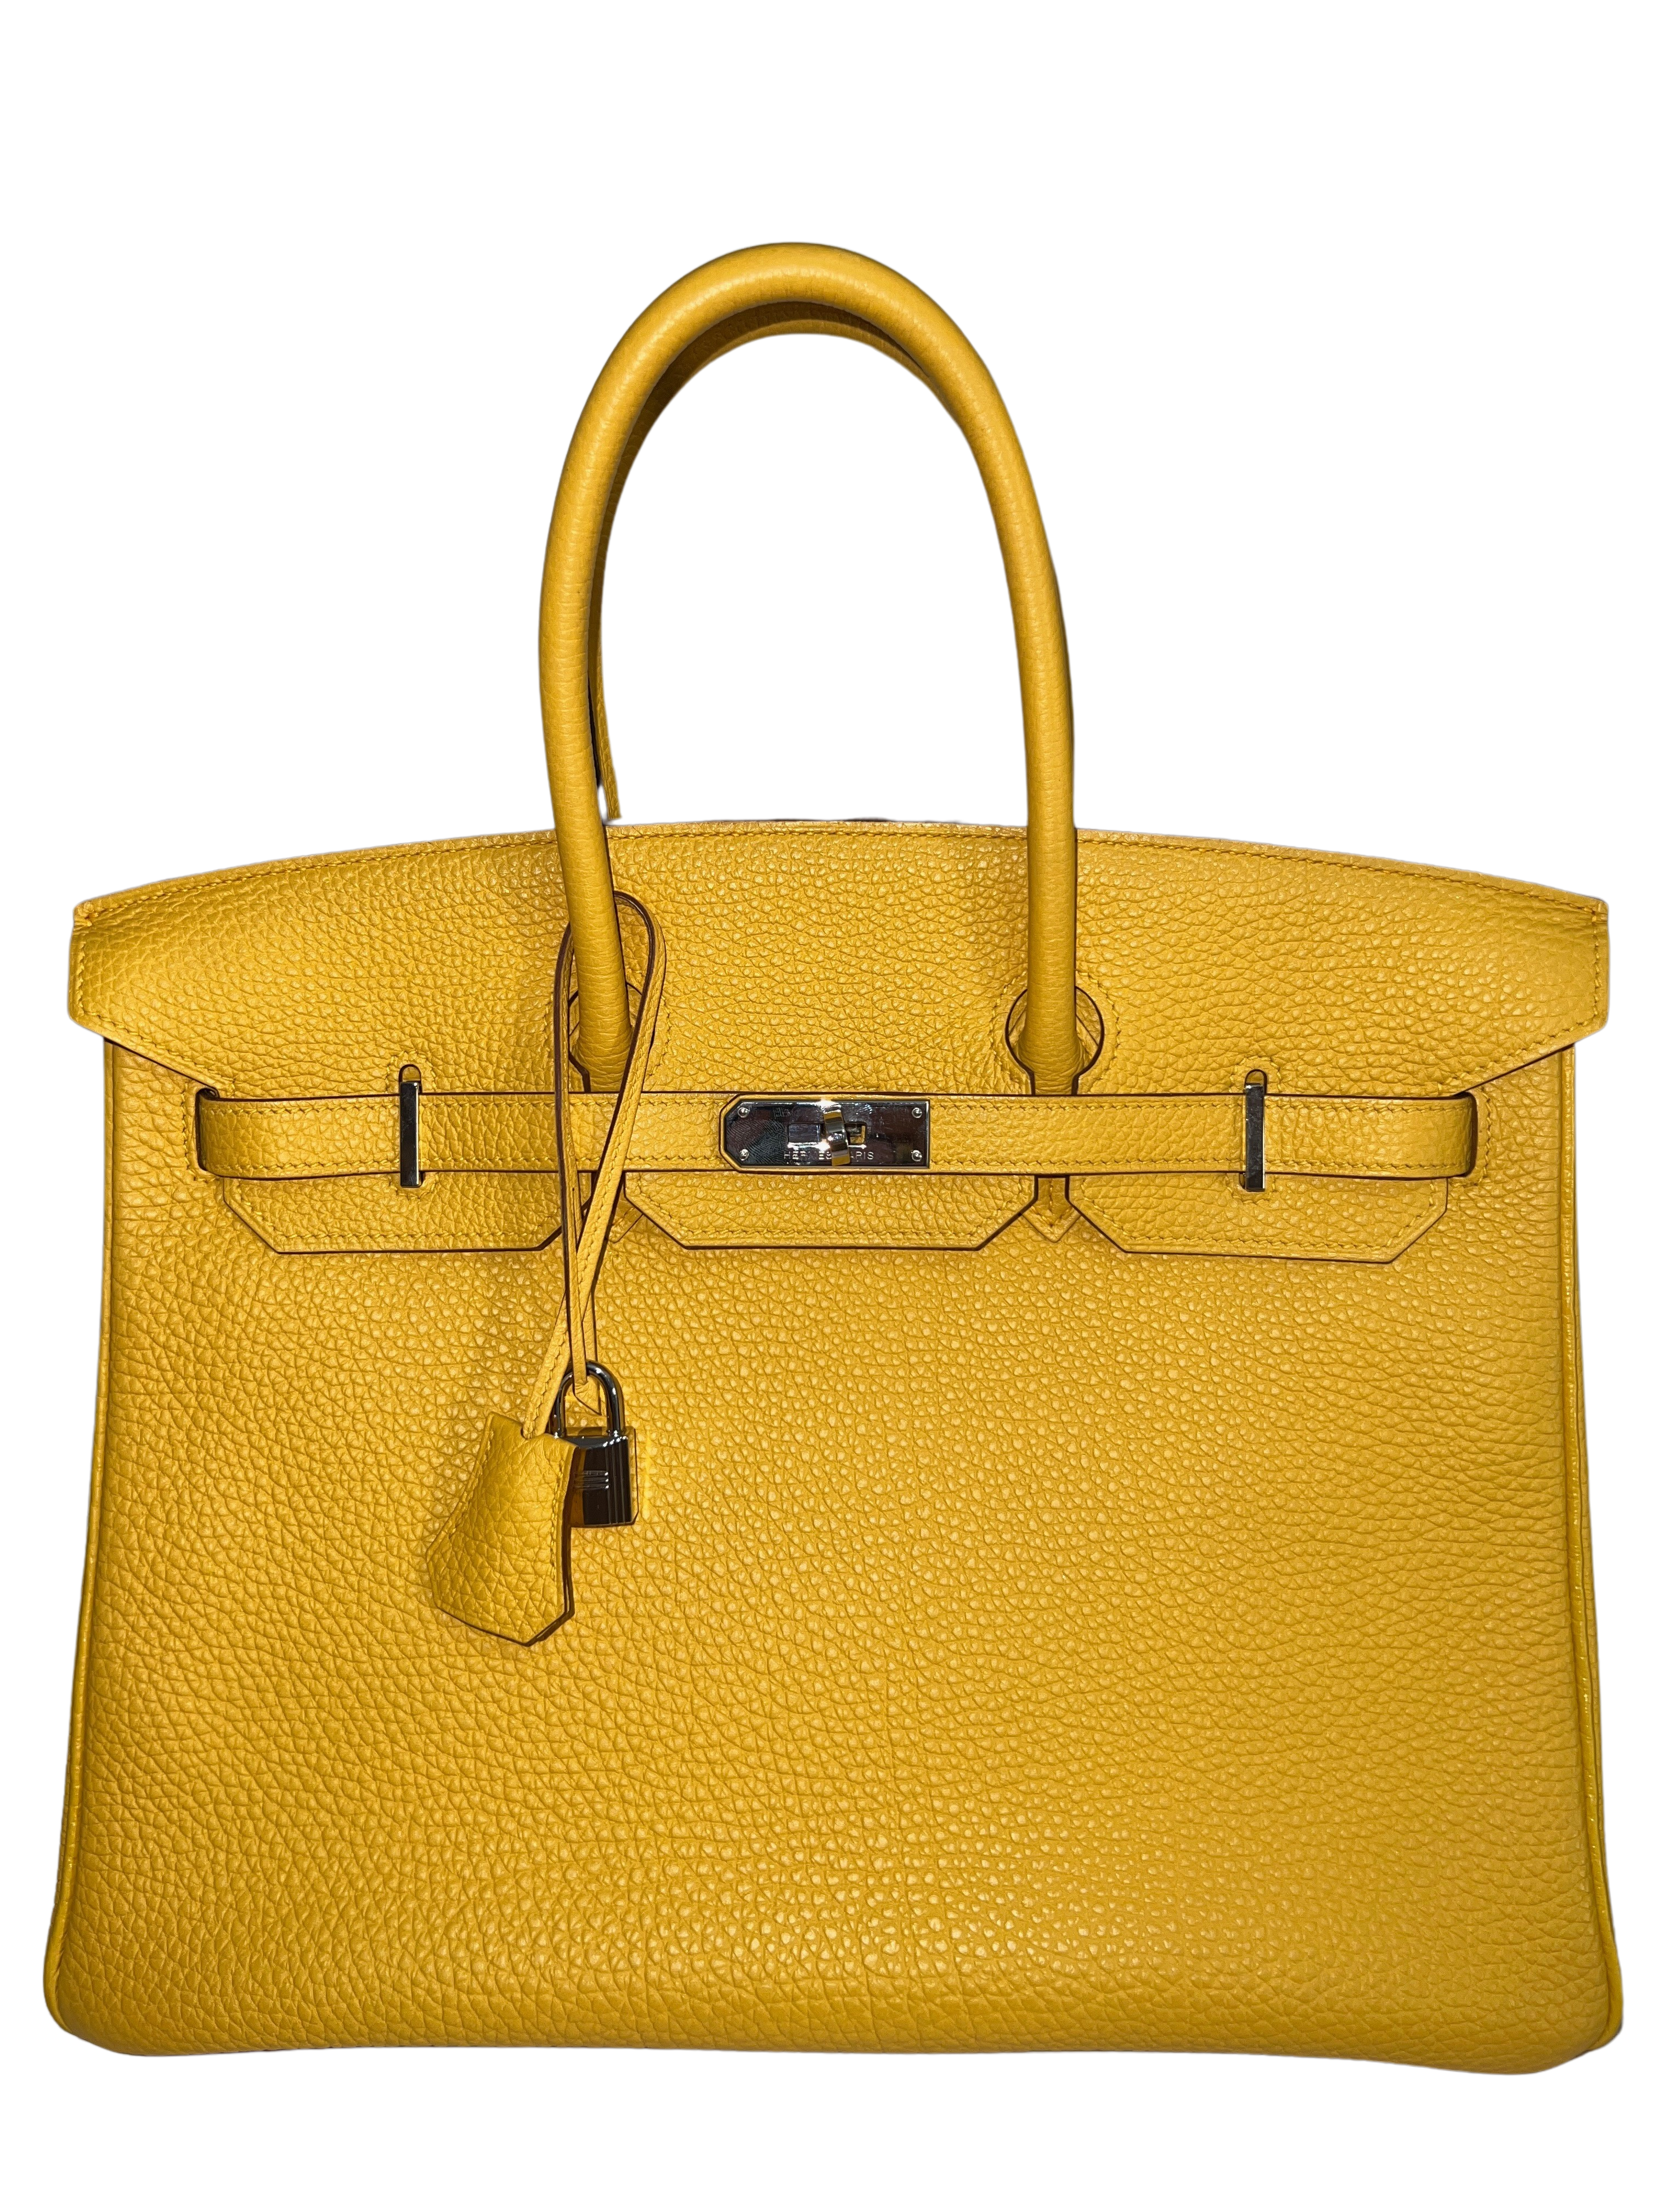 Sold at Auction: Hermes Rare 35cm Birkin Bag in Feu Taurillon